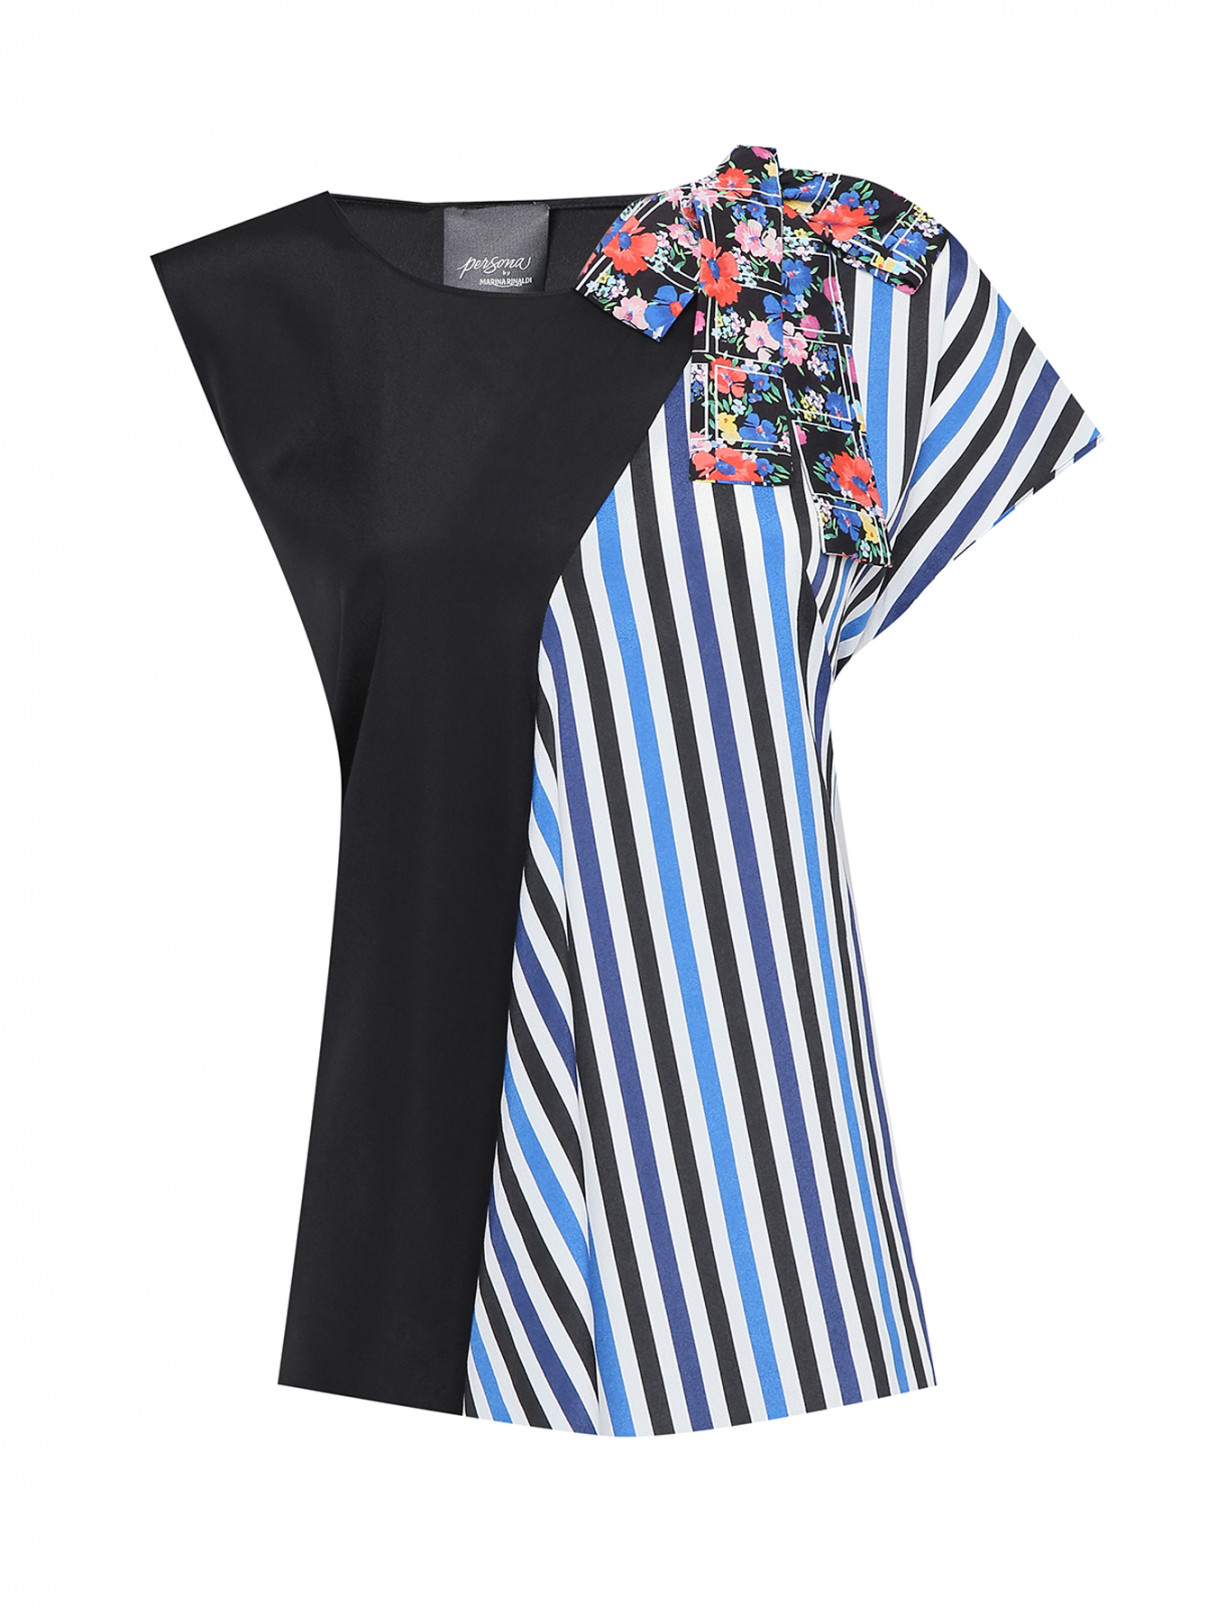 Блуза с узором полоска Persona by Marina Rinaldi  –  Общий вид  – Цвет:  Узор